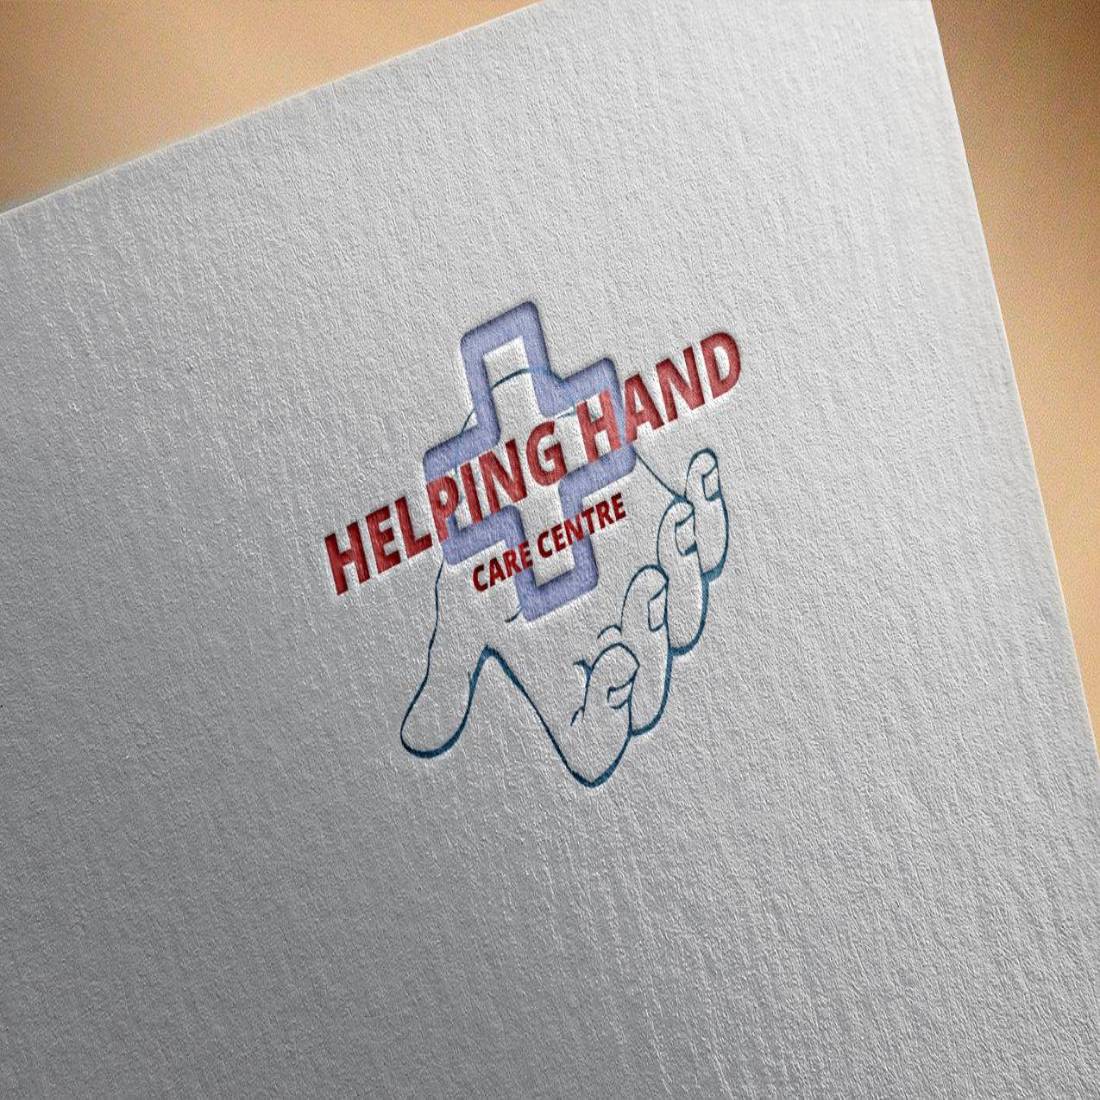 Care Centre Helping Hand Logo Design cover image.